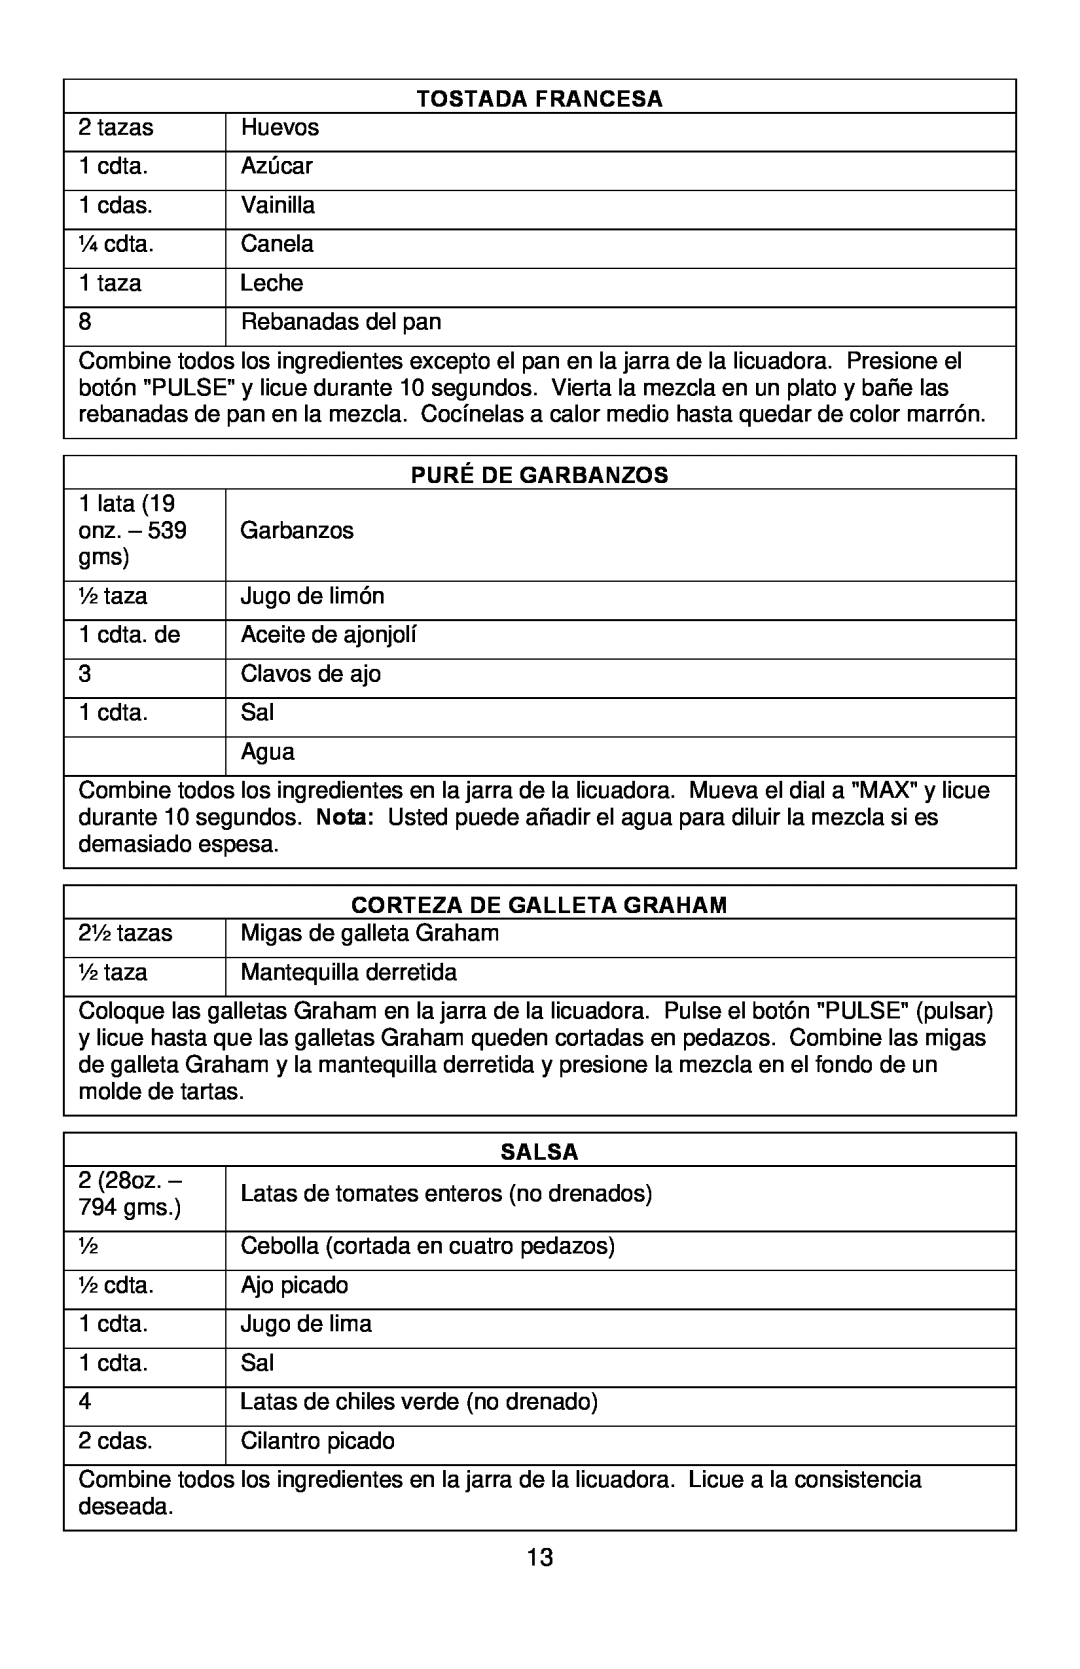 West Bend L5746, PBL1000 instruction manual Tostada Francesa, Puré De Garbanzos, Corteza De Galleta Graham, Salsa 